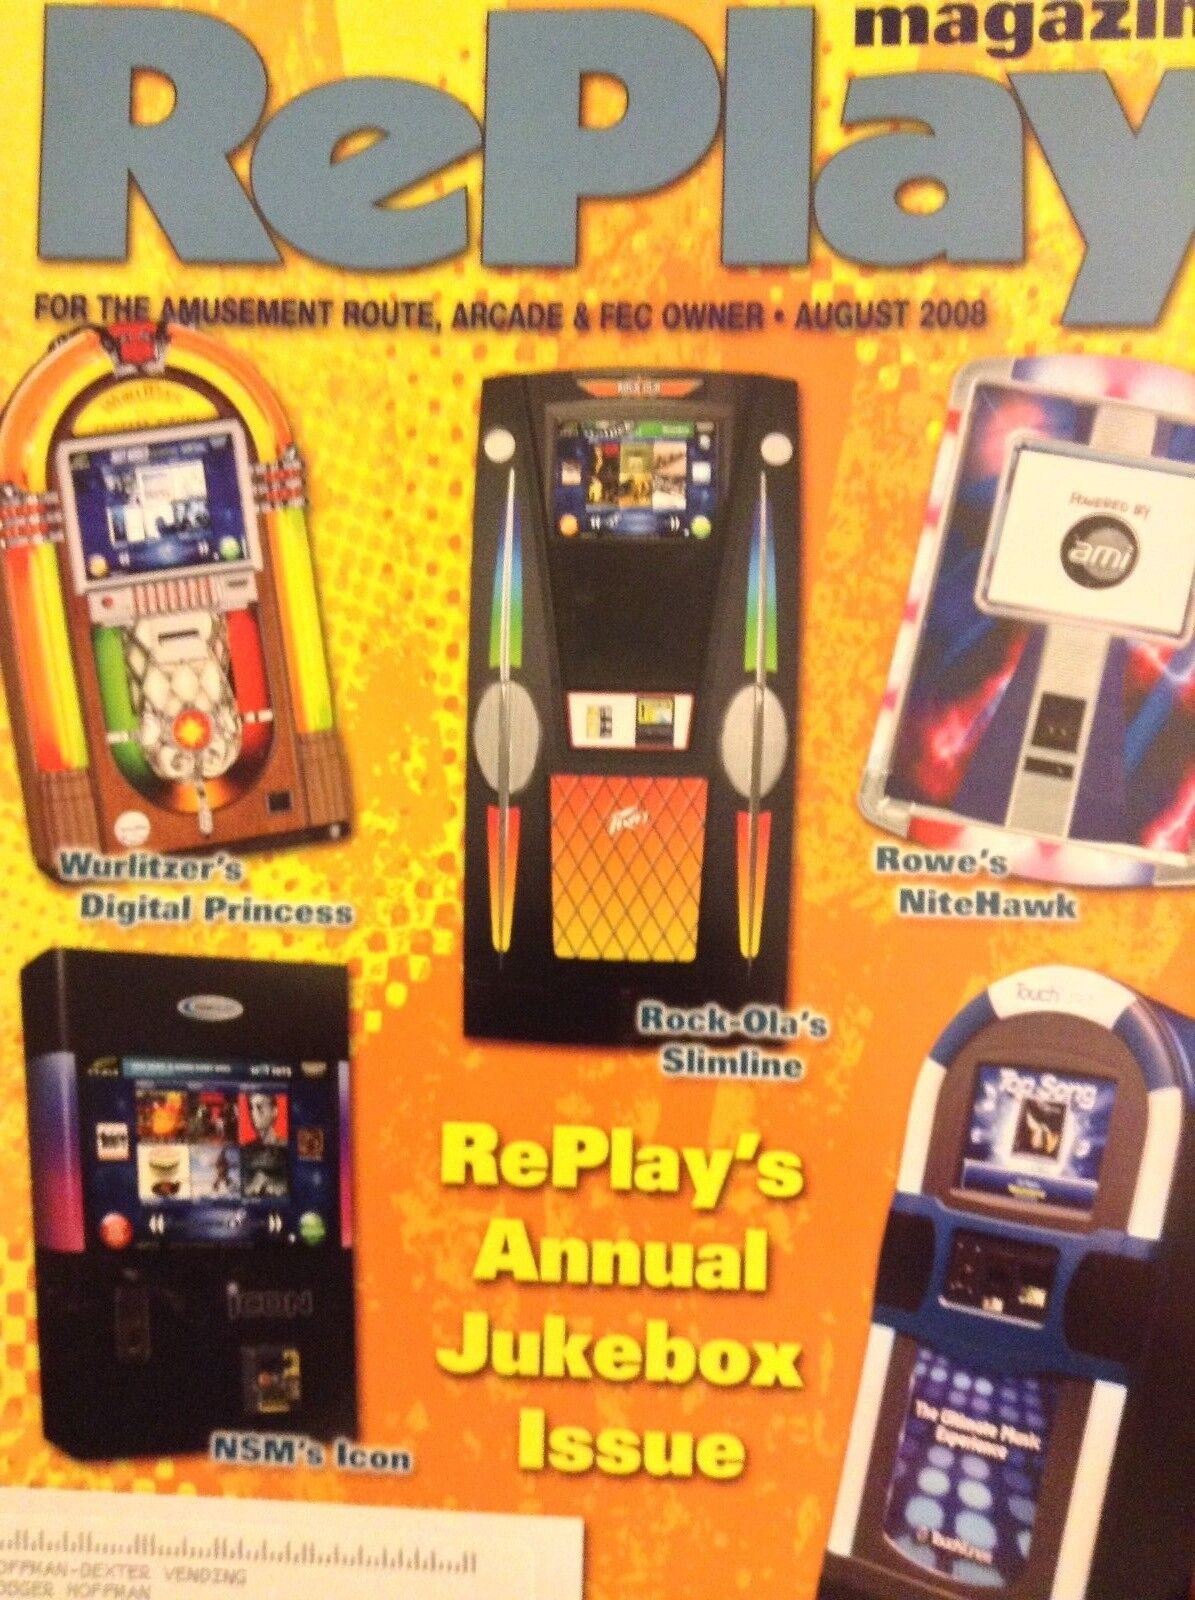 RePlay Arcade Magazine Annual Jukebox Issue August 2008 012118nonrh